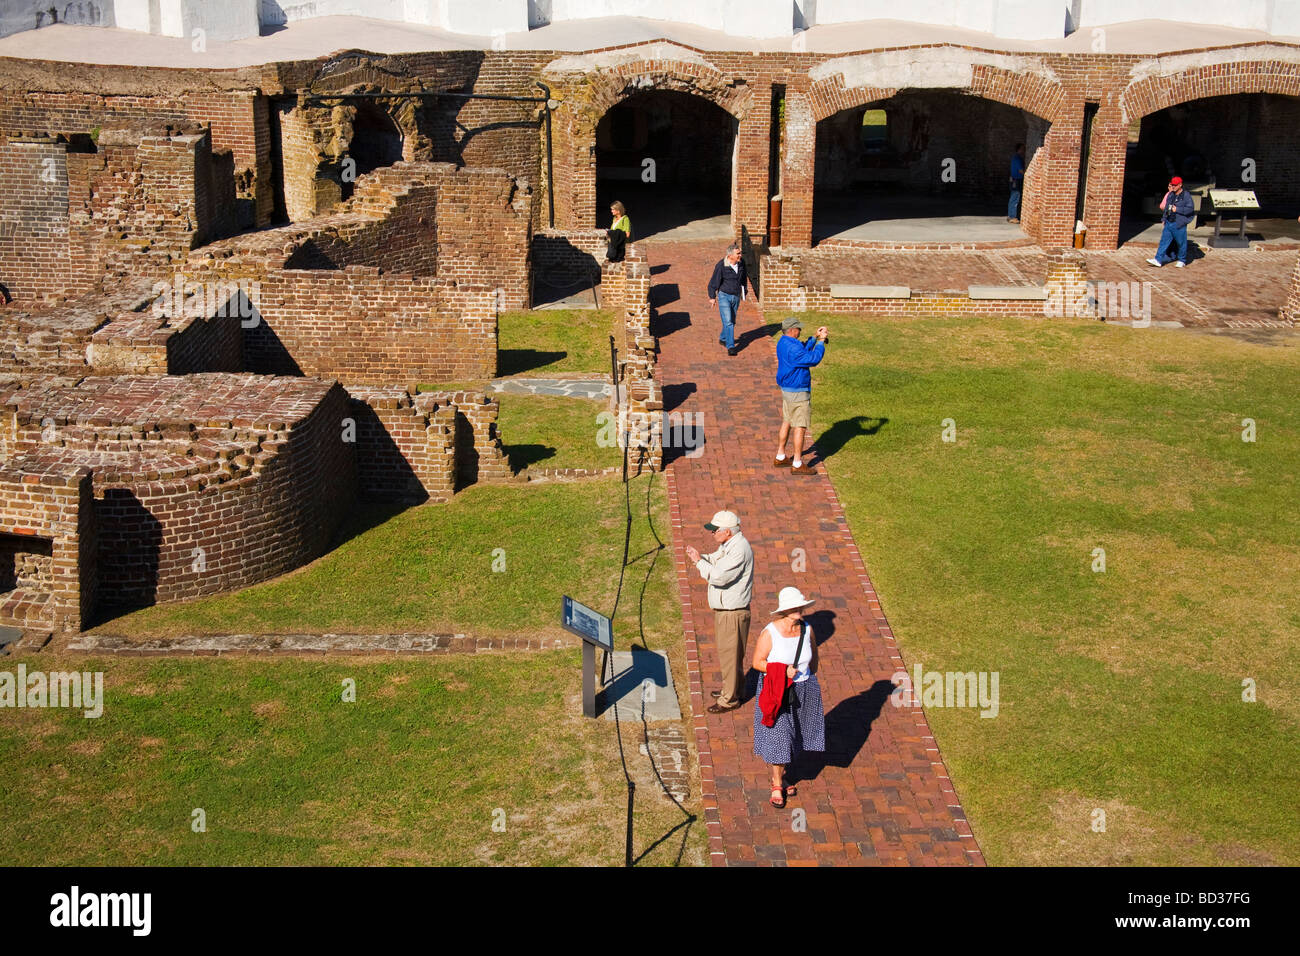 Fort Sumter National Monument Charleston South Carolina USA Stock Photo